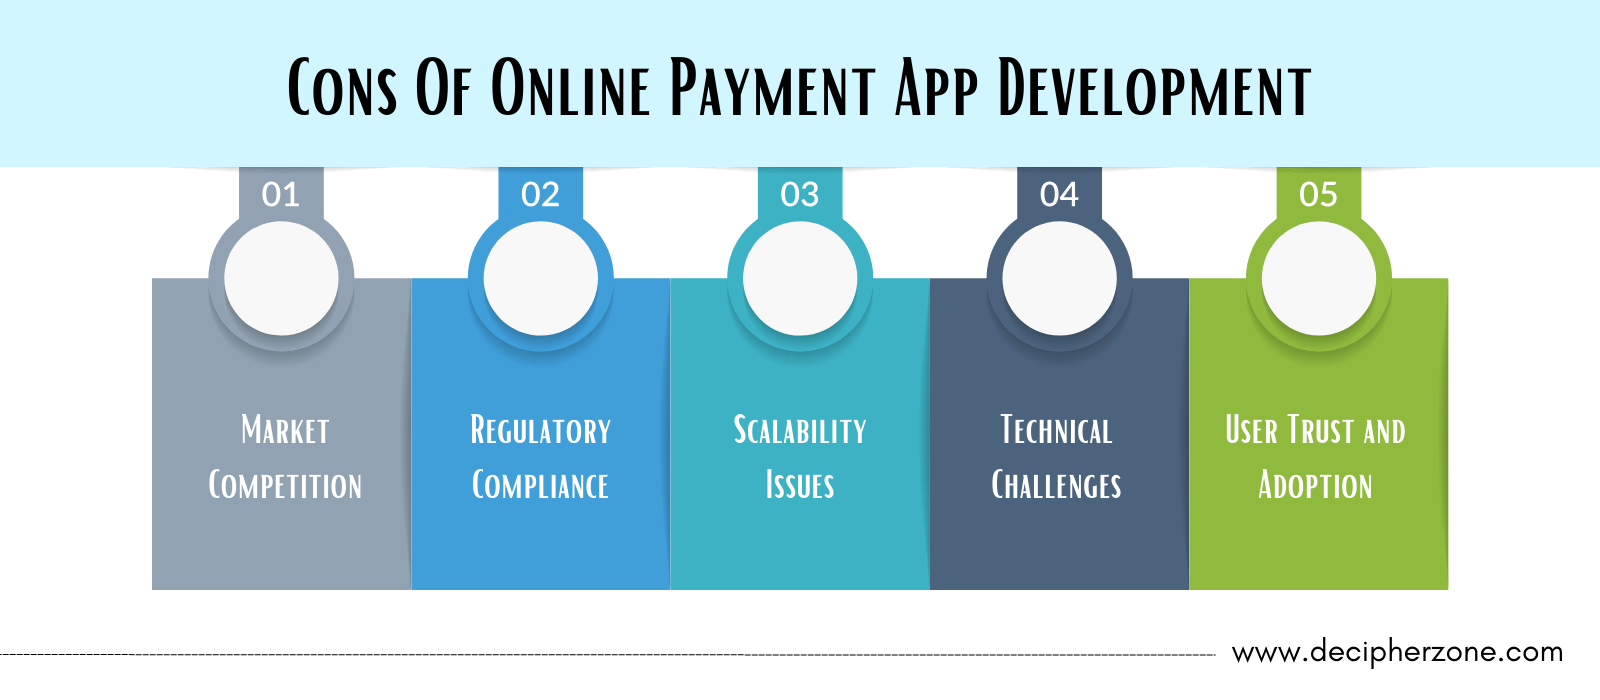 Online Payment App Development Cons